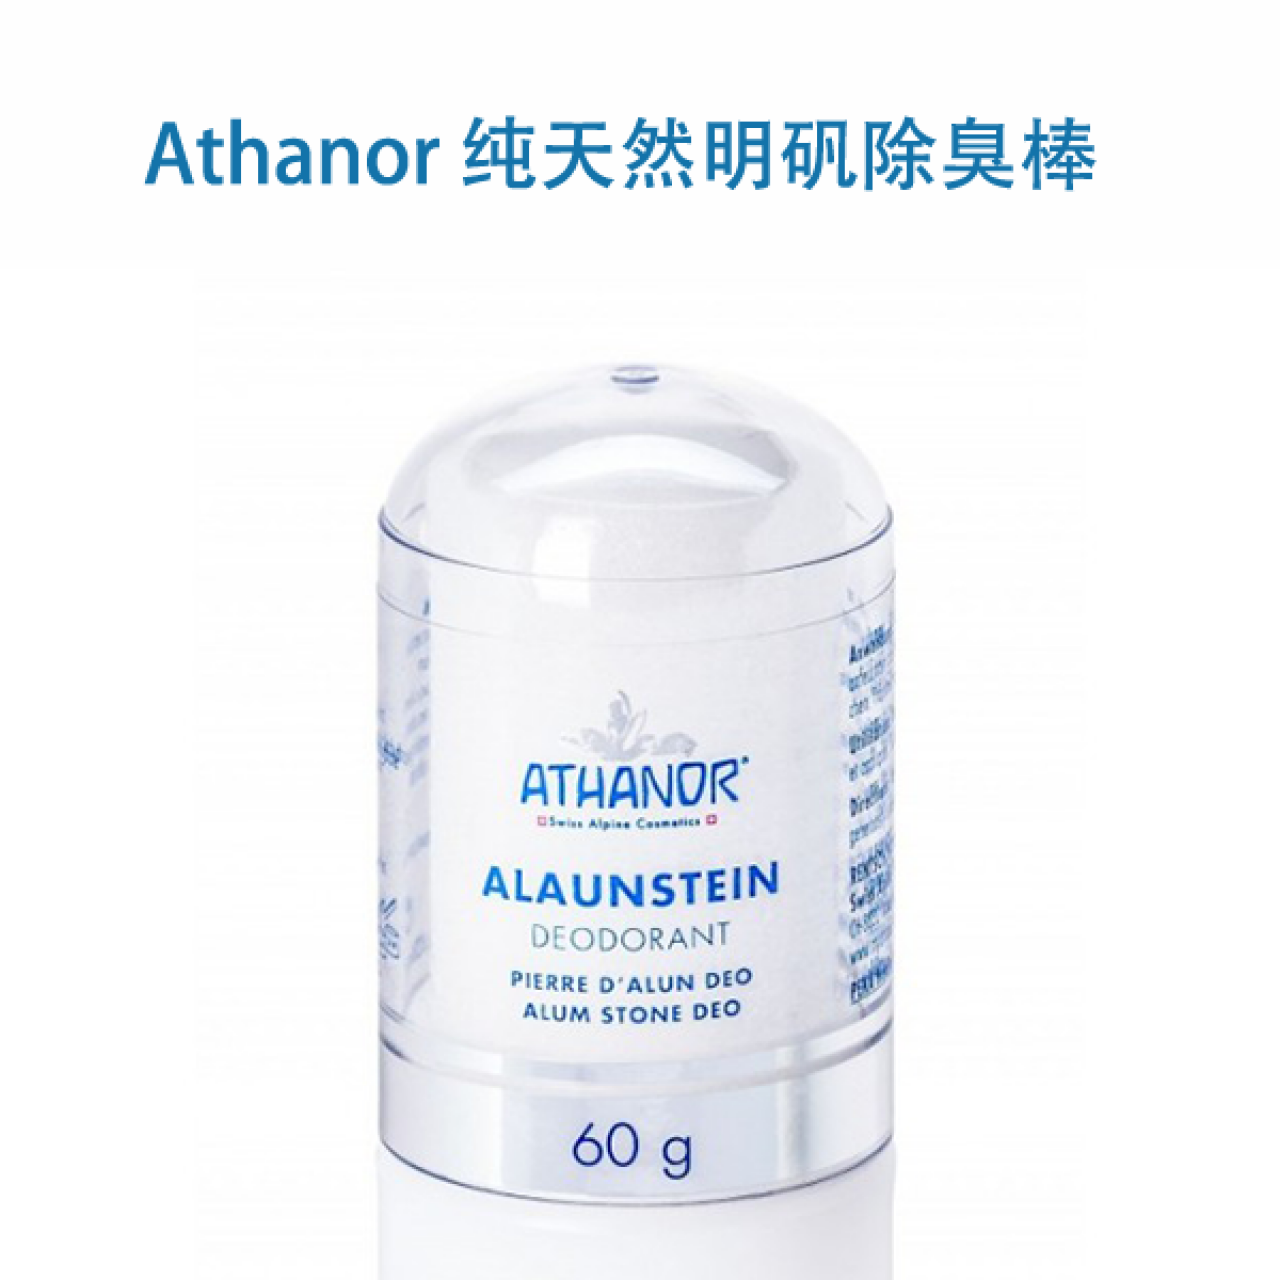 Athanor天然明矾除臭棒ATHANOR Alaunstein Deo 60 g - otaolife海淘电商